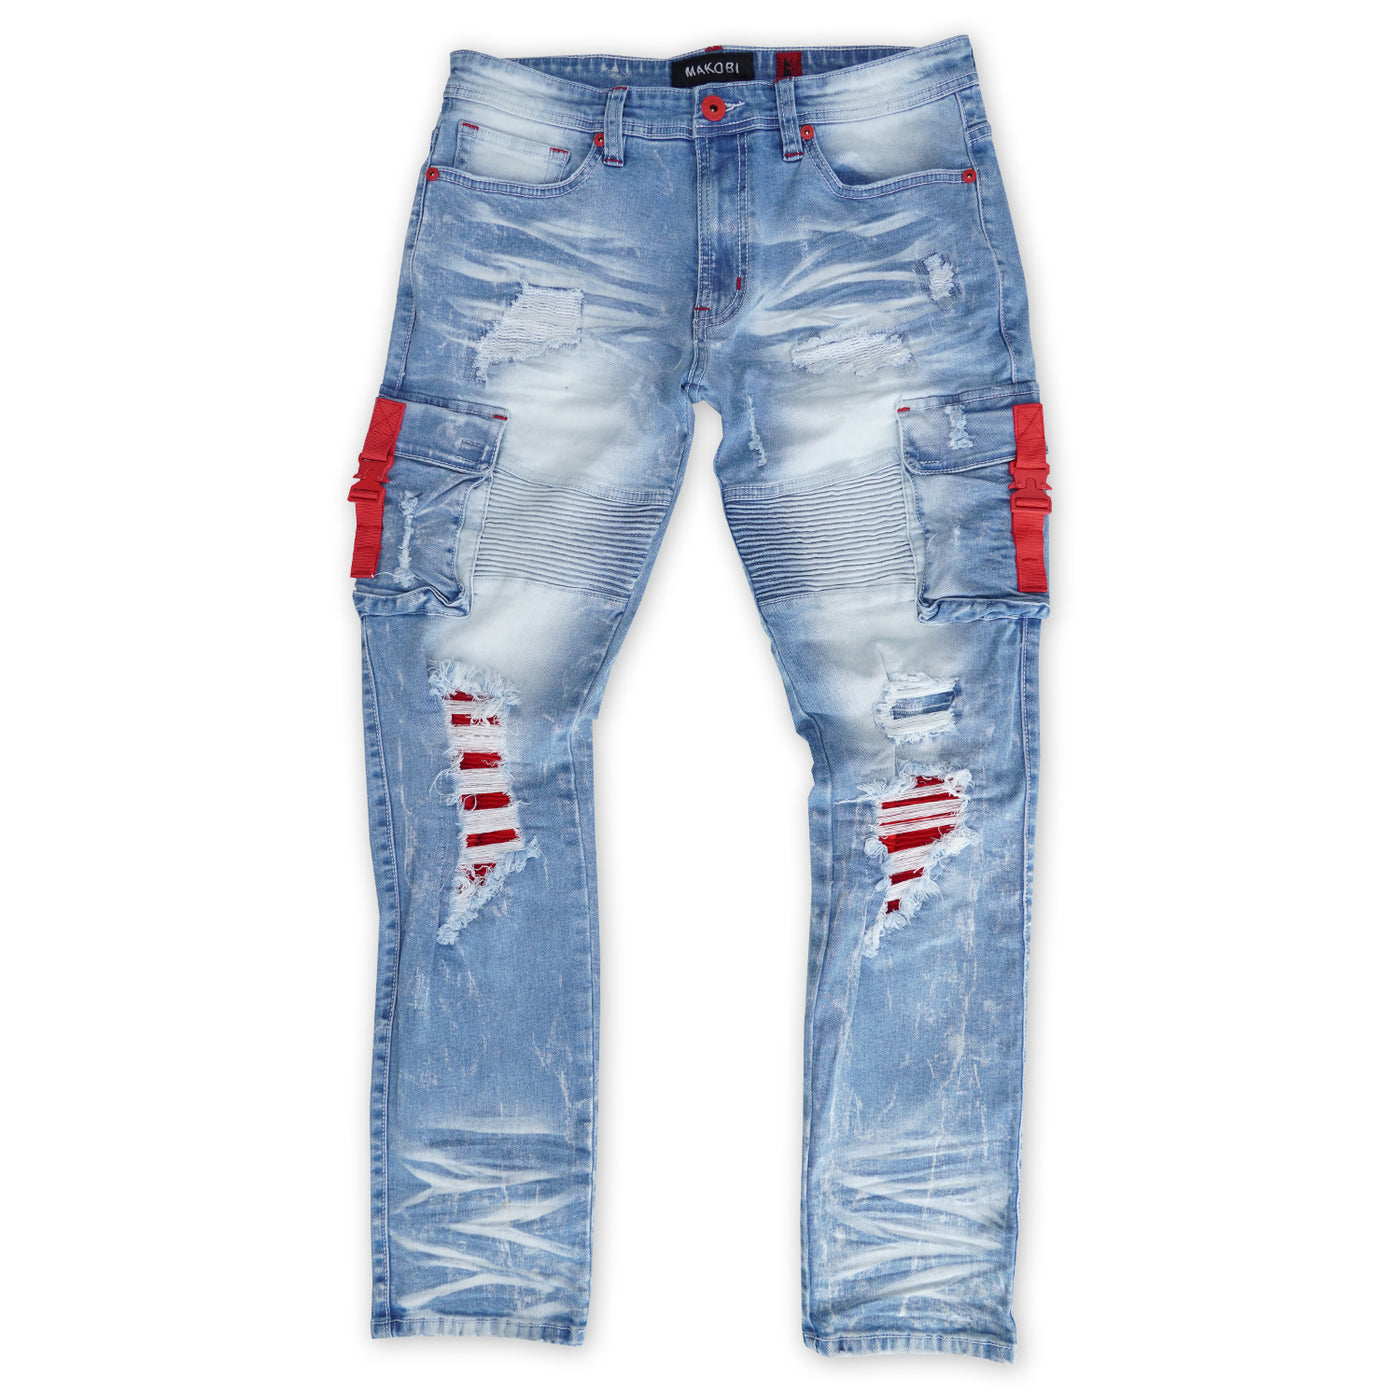 M1939 Railay Biker Jeans w/ Side Pockets - Light Wash